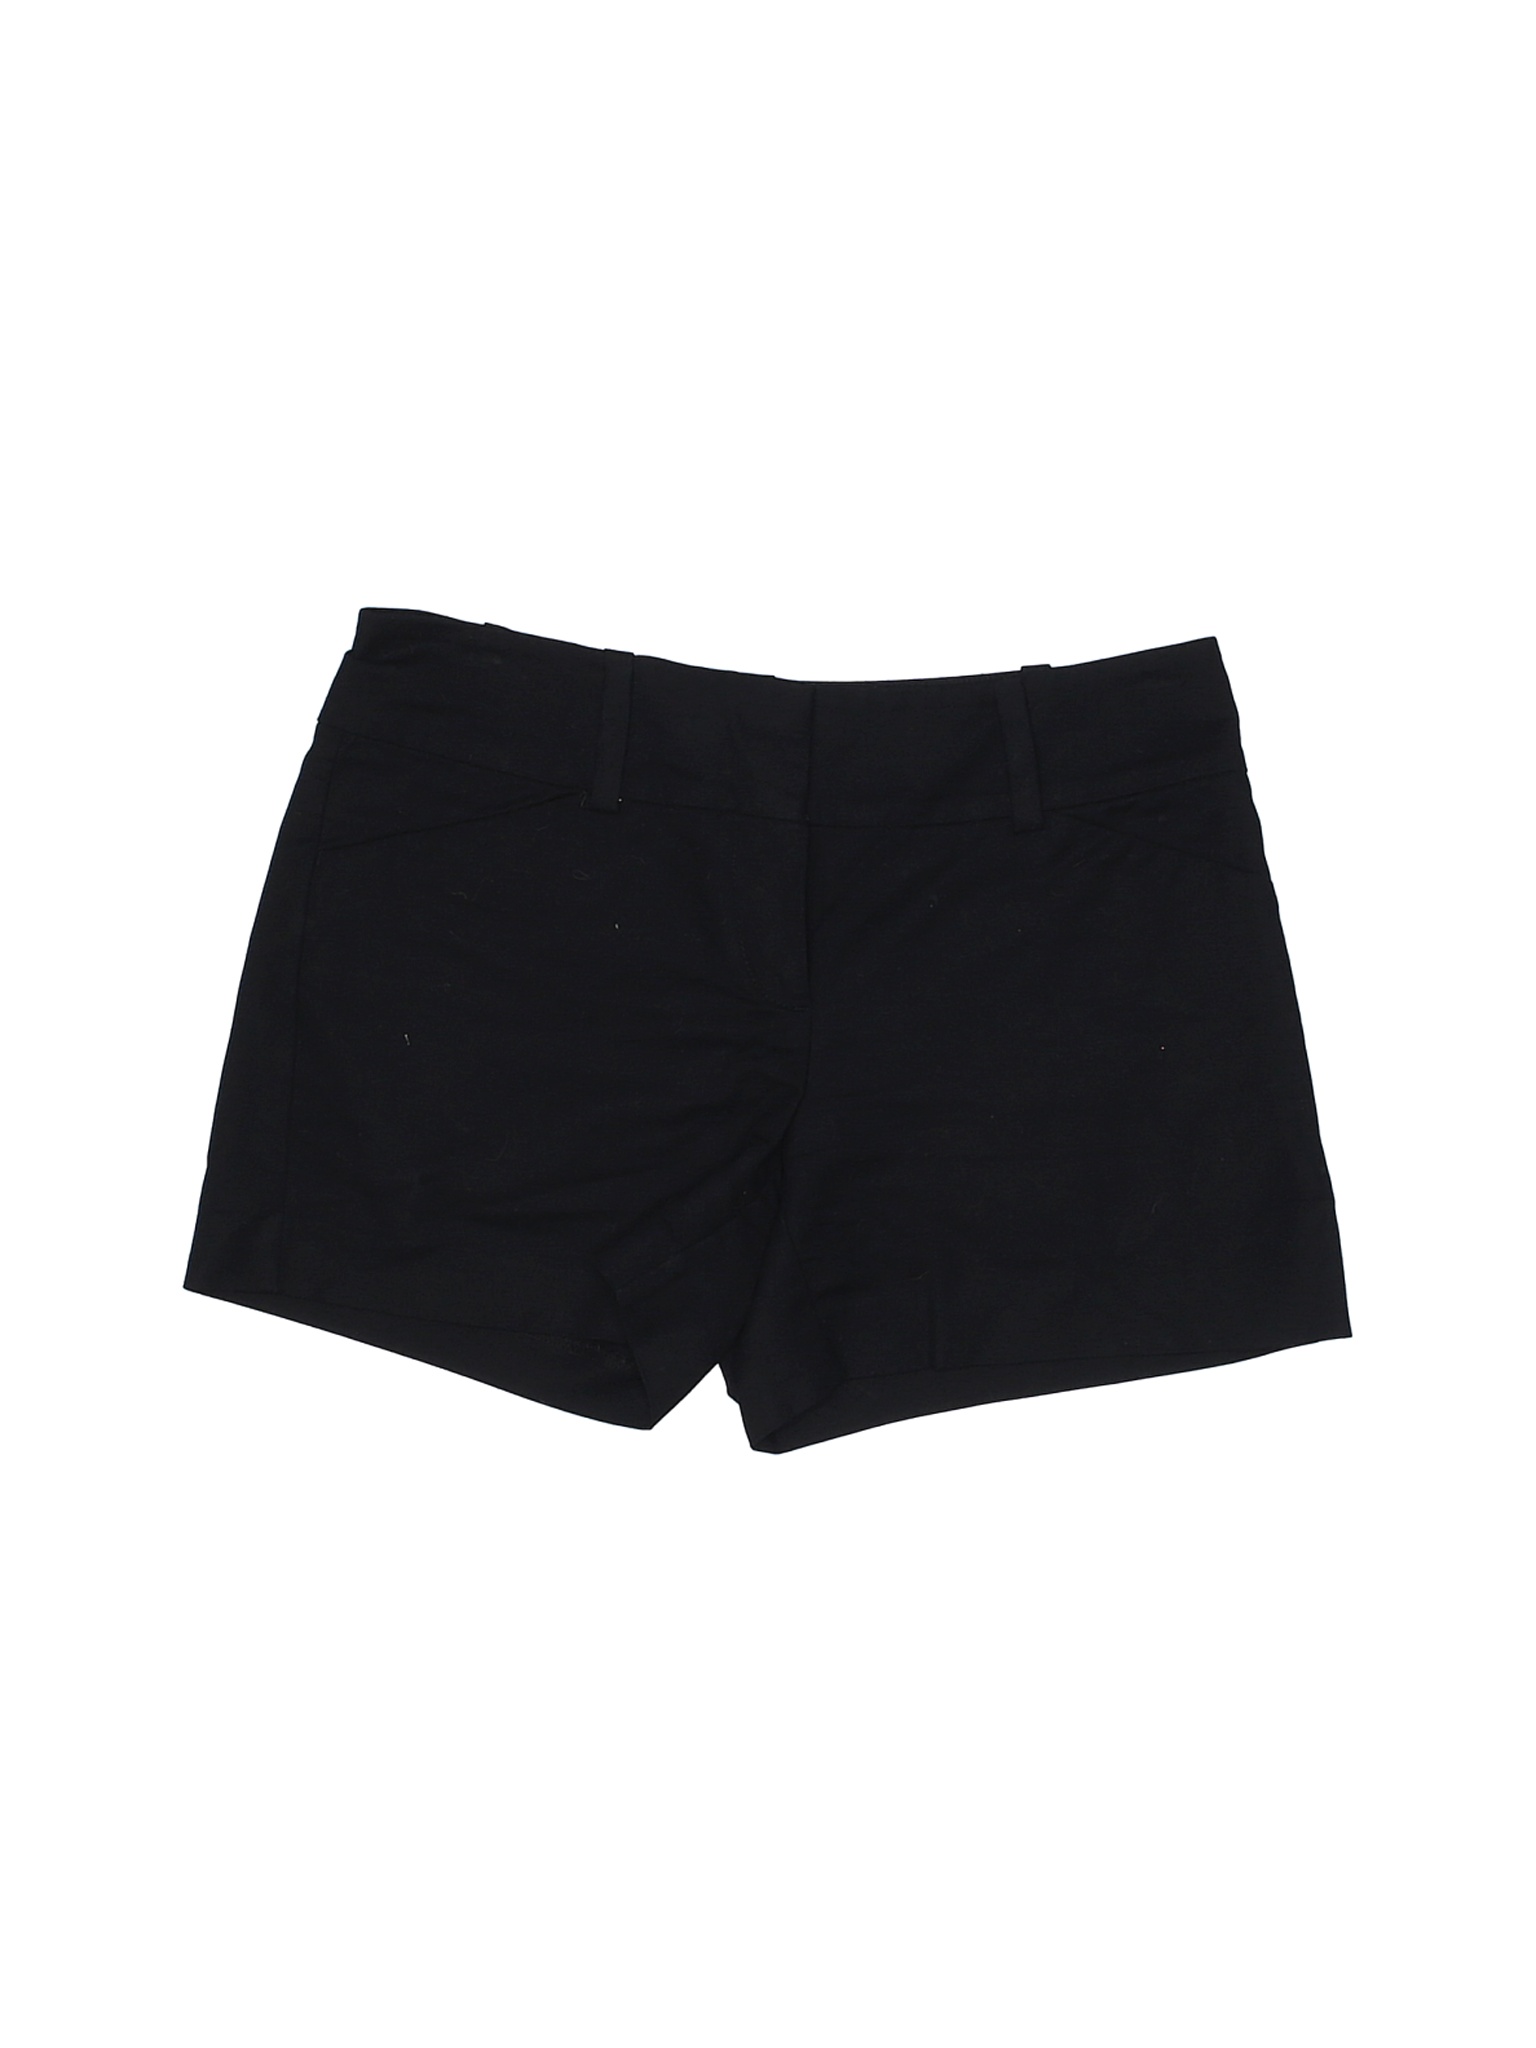 Ann Taylor Factory Women Black Dressy Shorts 2 | eBay